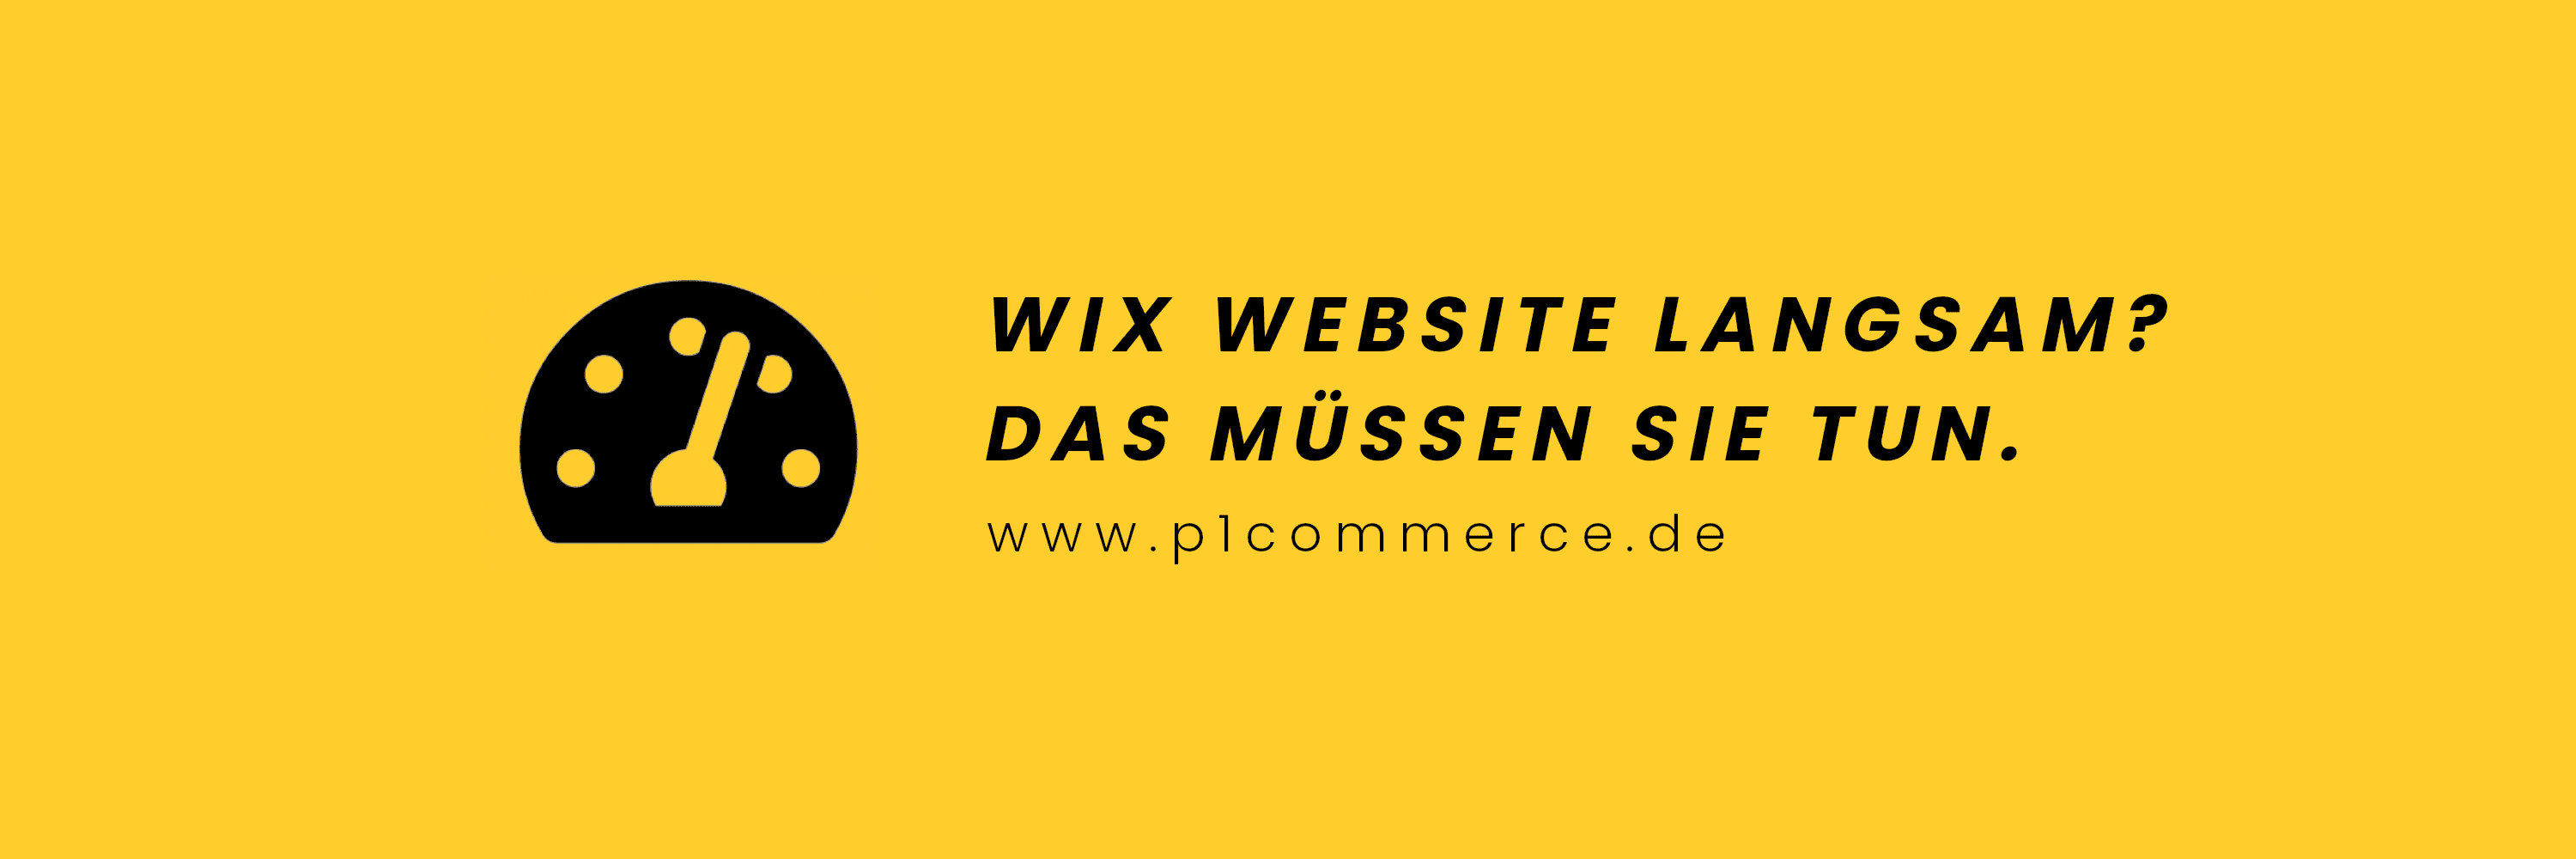 wix website langsam